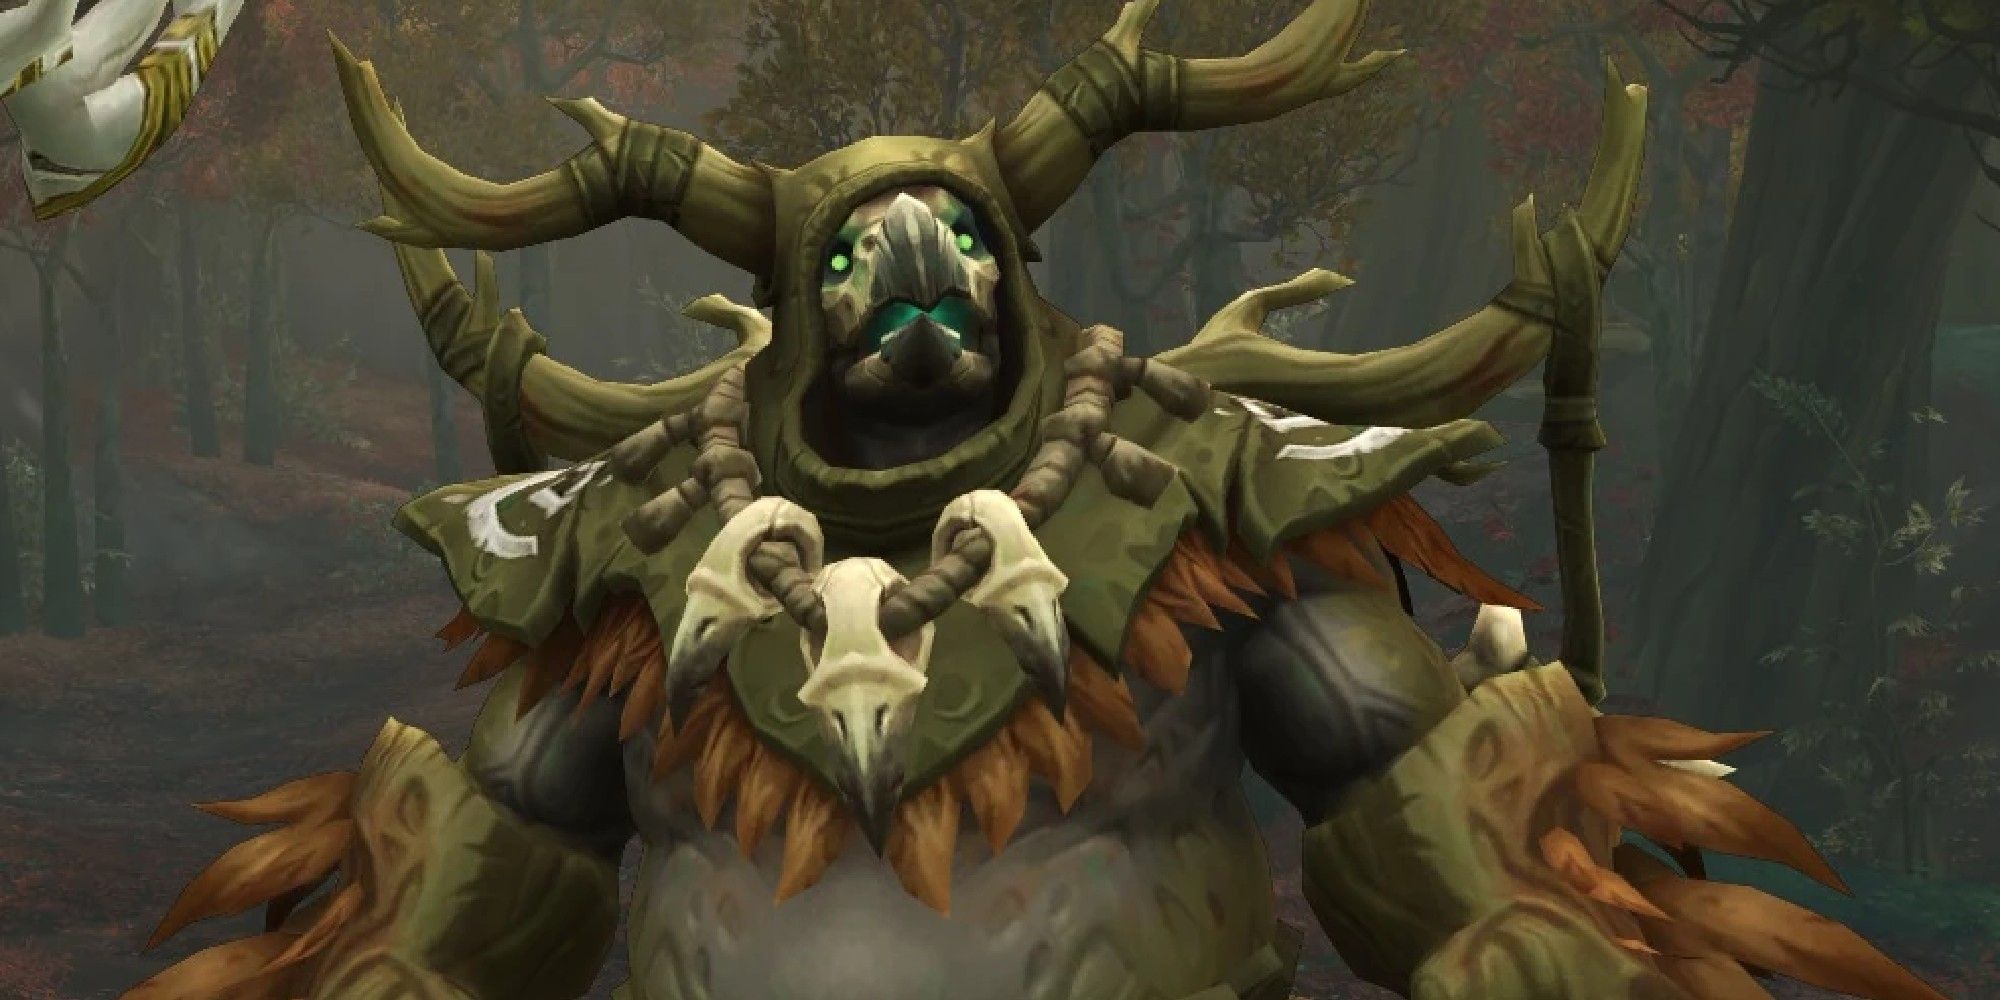 World of Warcraft image showing a Kul Tiran human in moonkin form